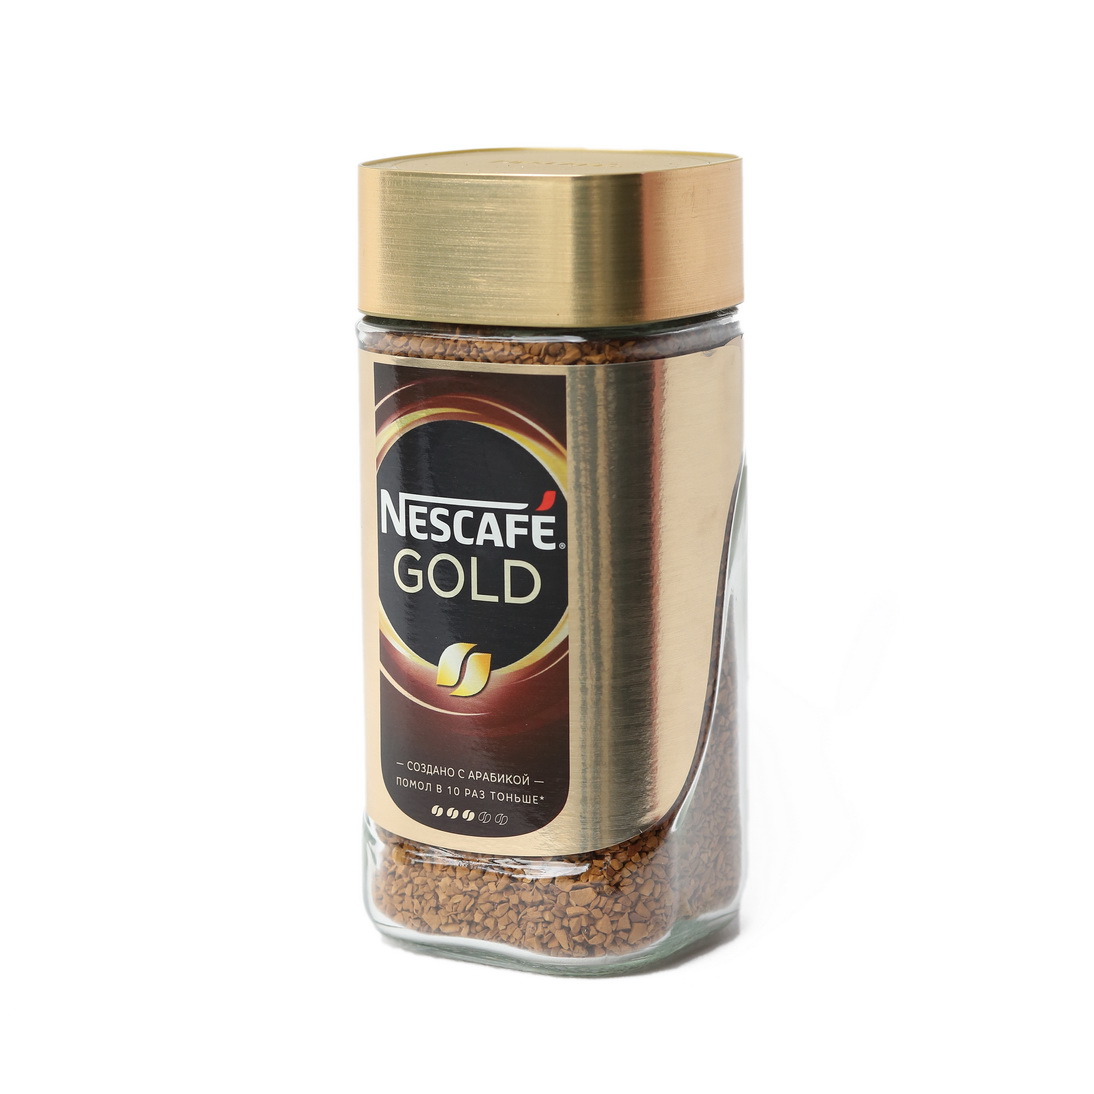 Nescafe Gold imported